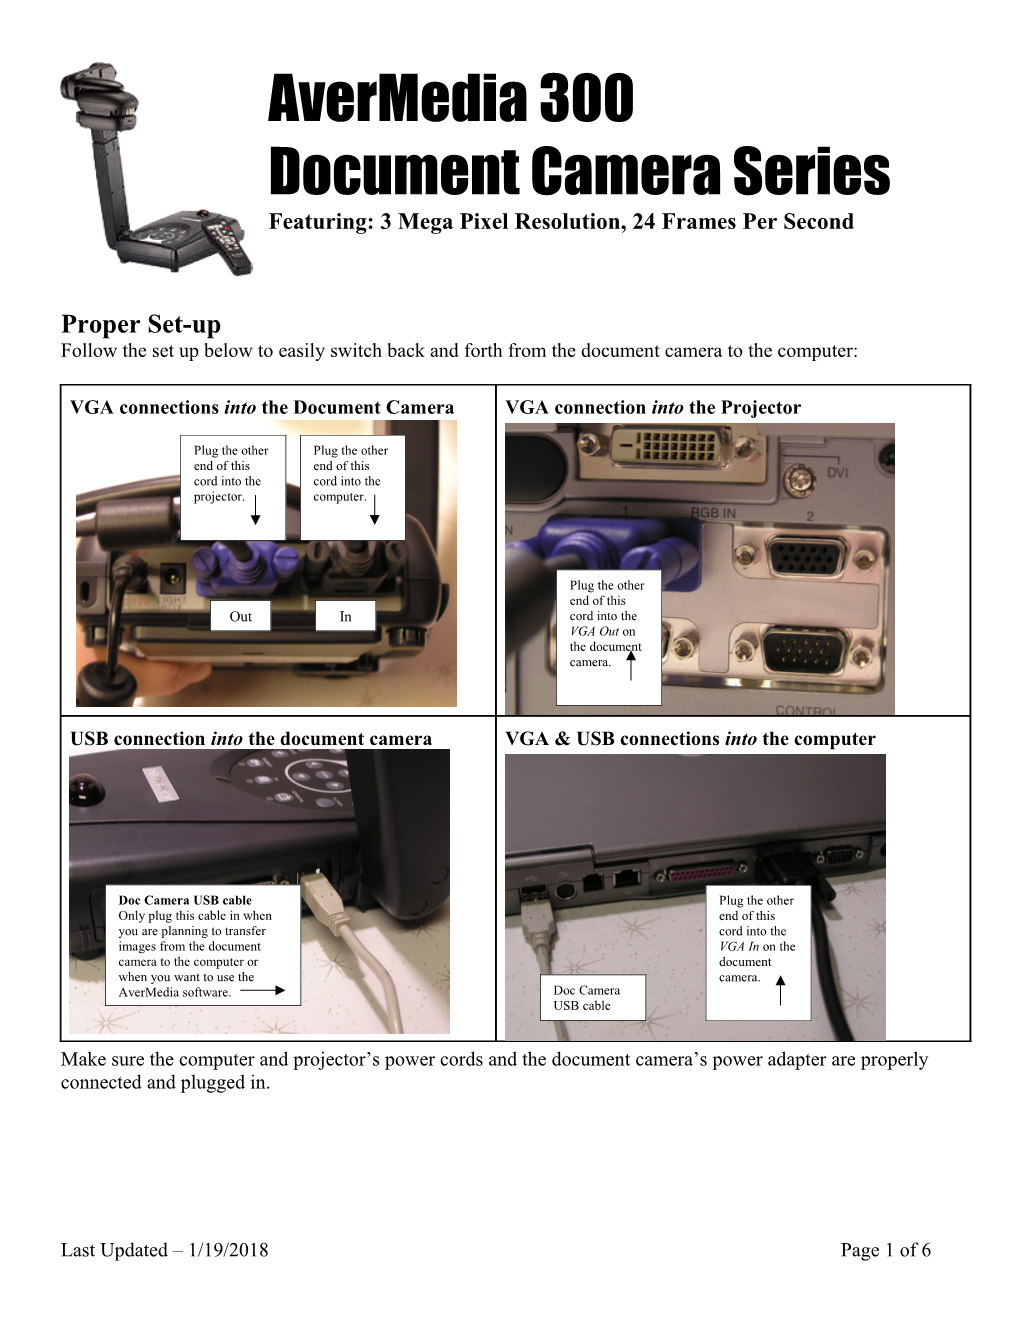 Avermedia 300 Document Camera Series Featuring: 3 Mega Pixel Resolution, 24 Frames Per Second